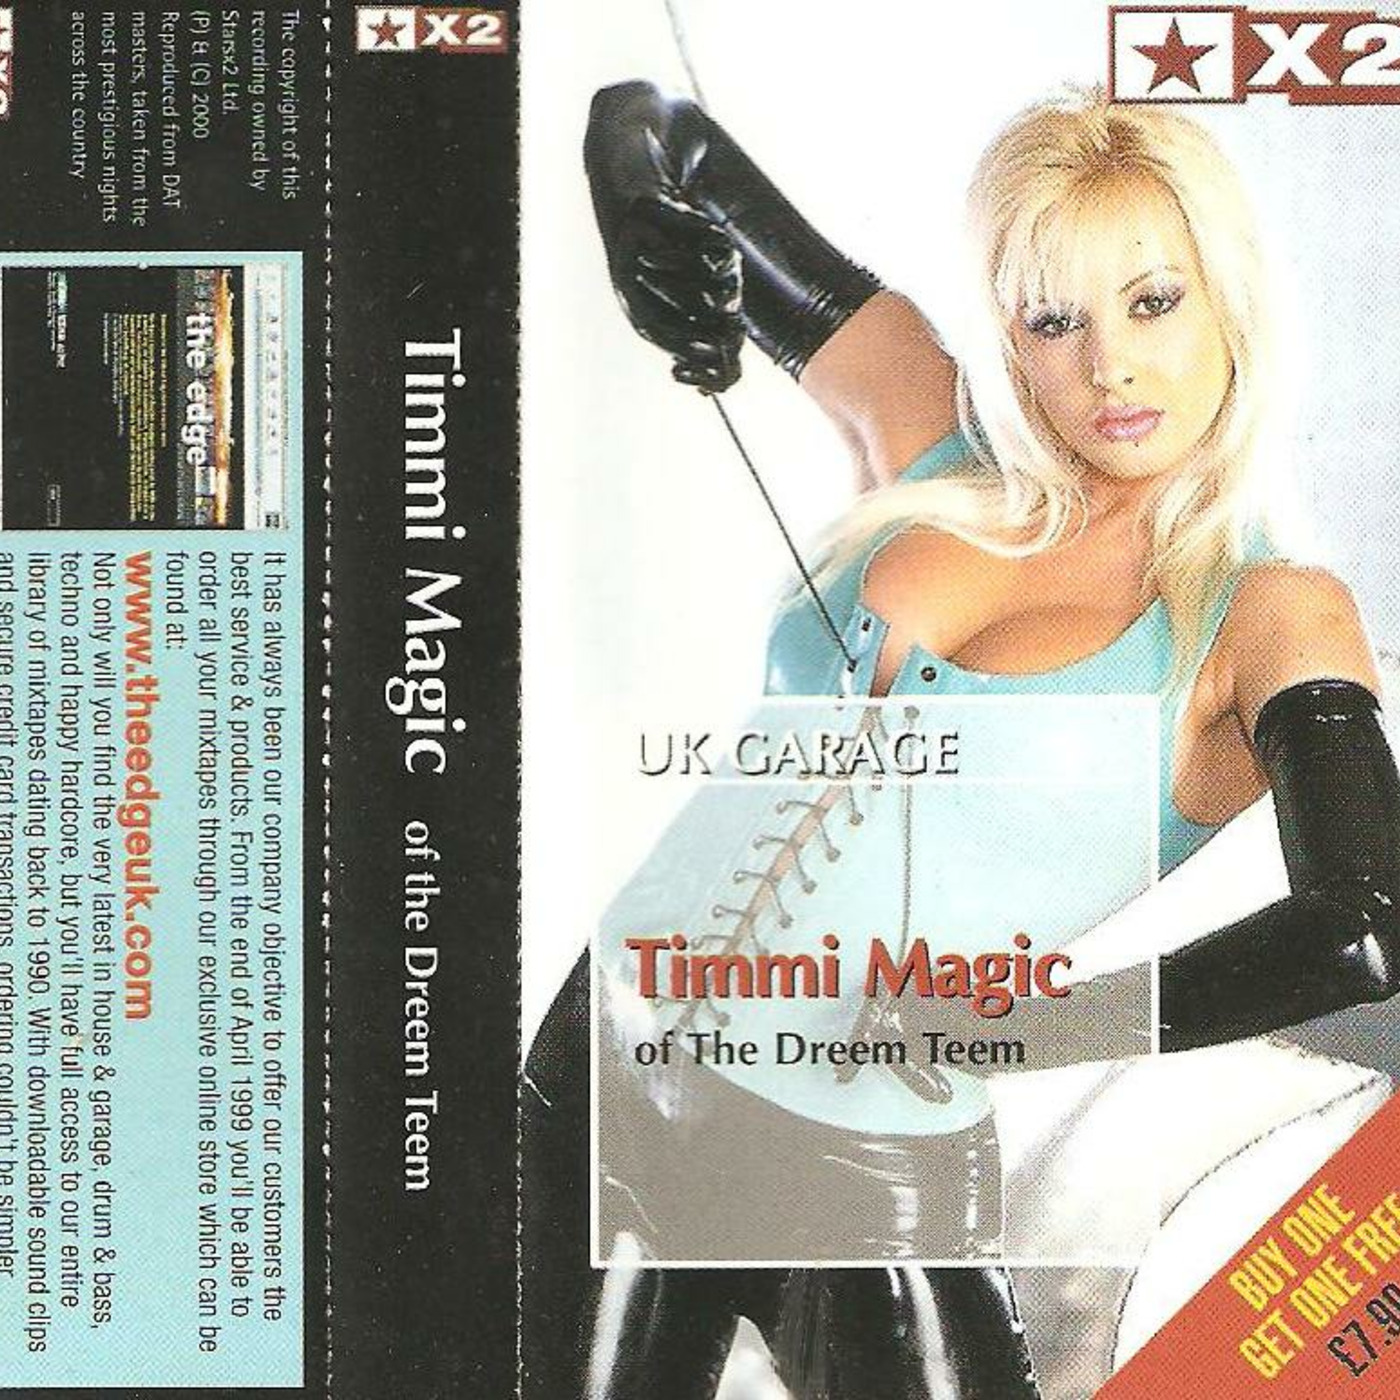 (2000) Timmi Magic - Stars X2 [UK Garage]